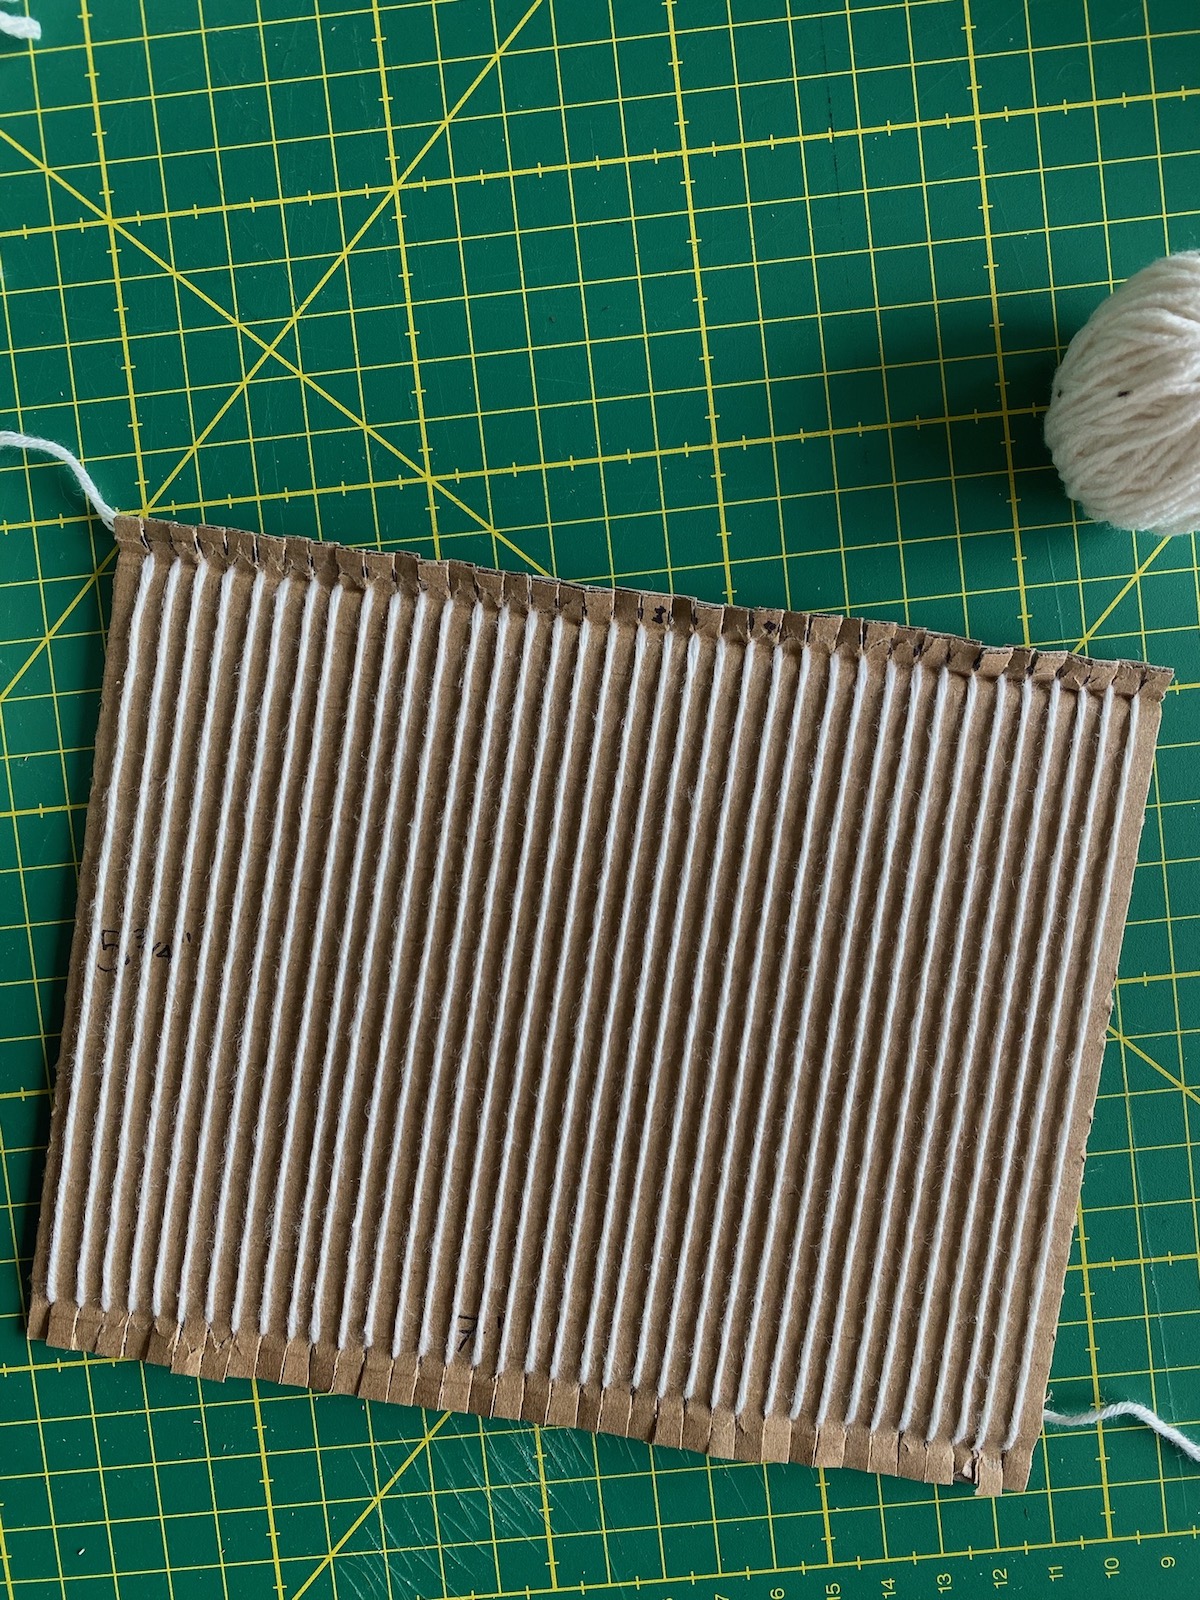 DIY Confetti Weaving